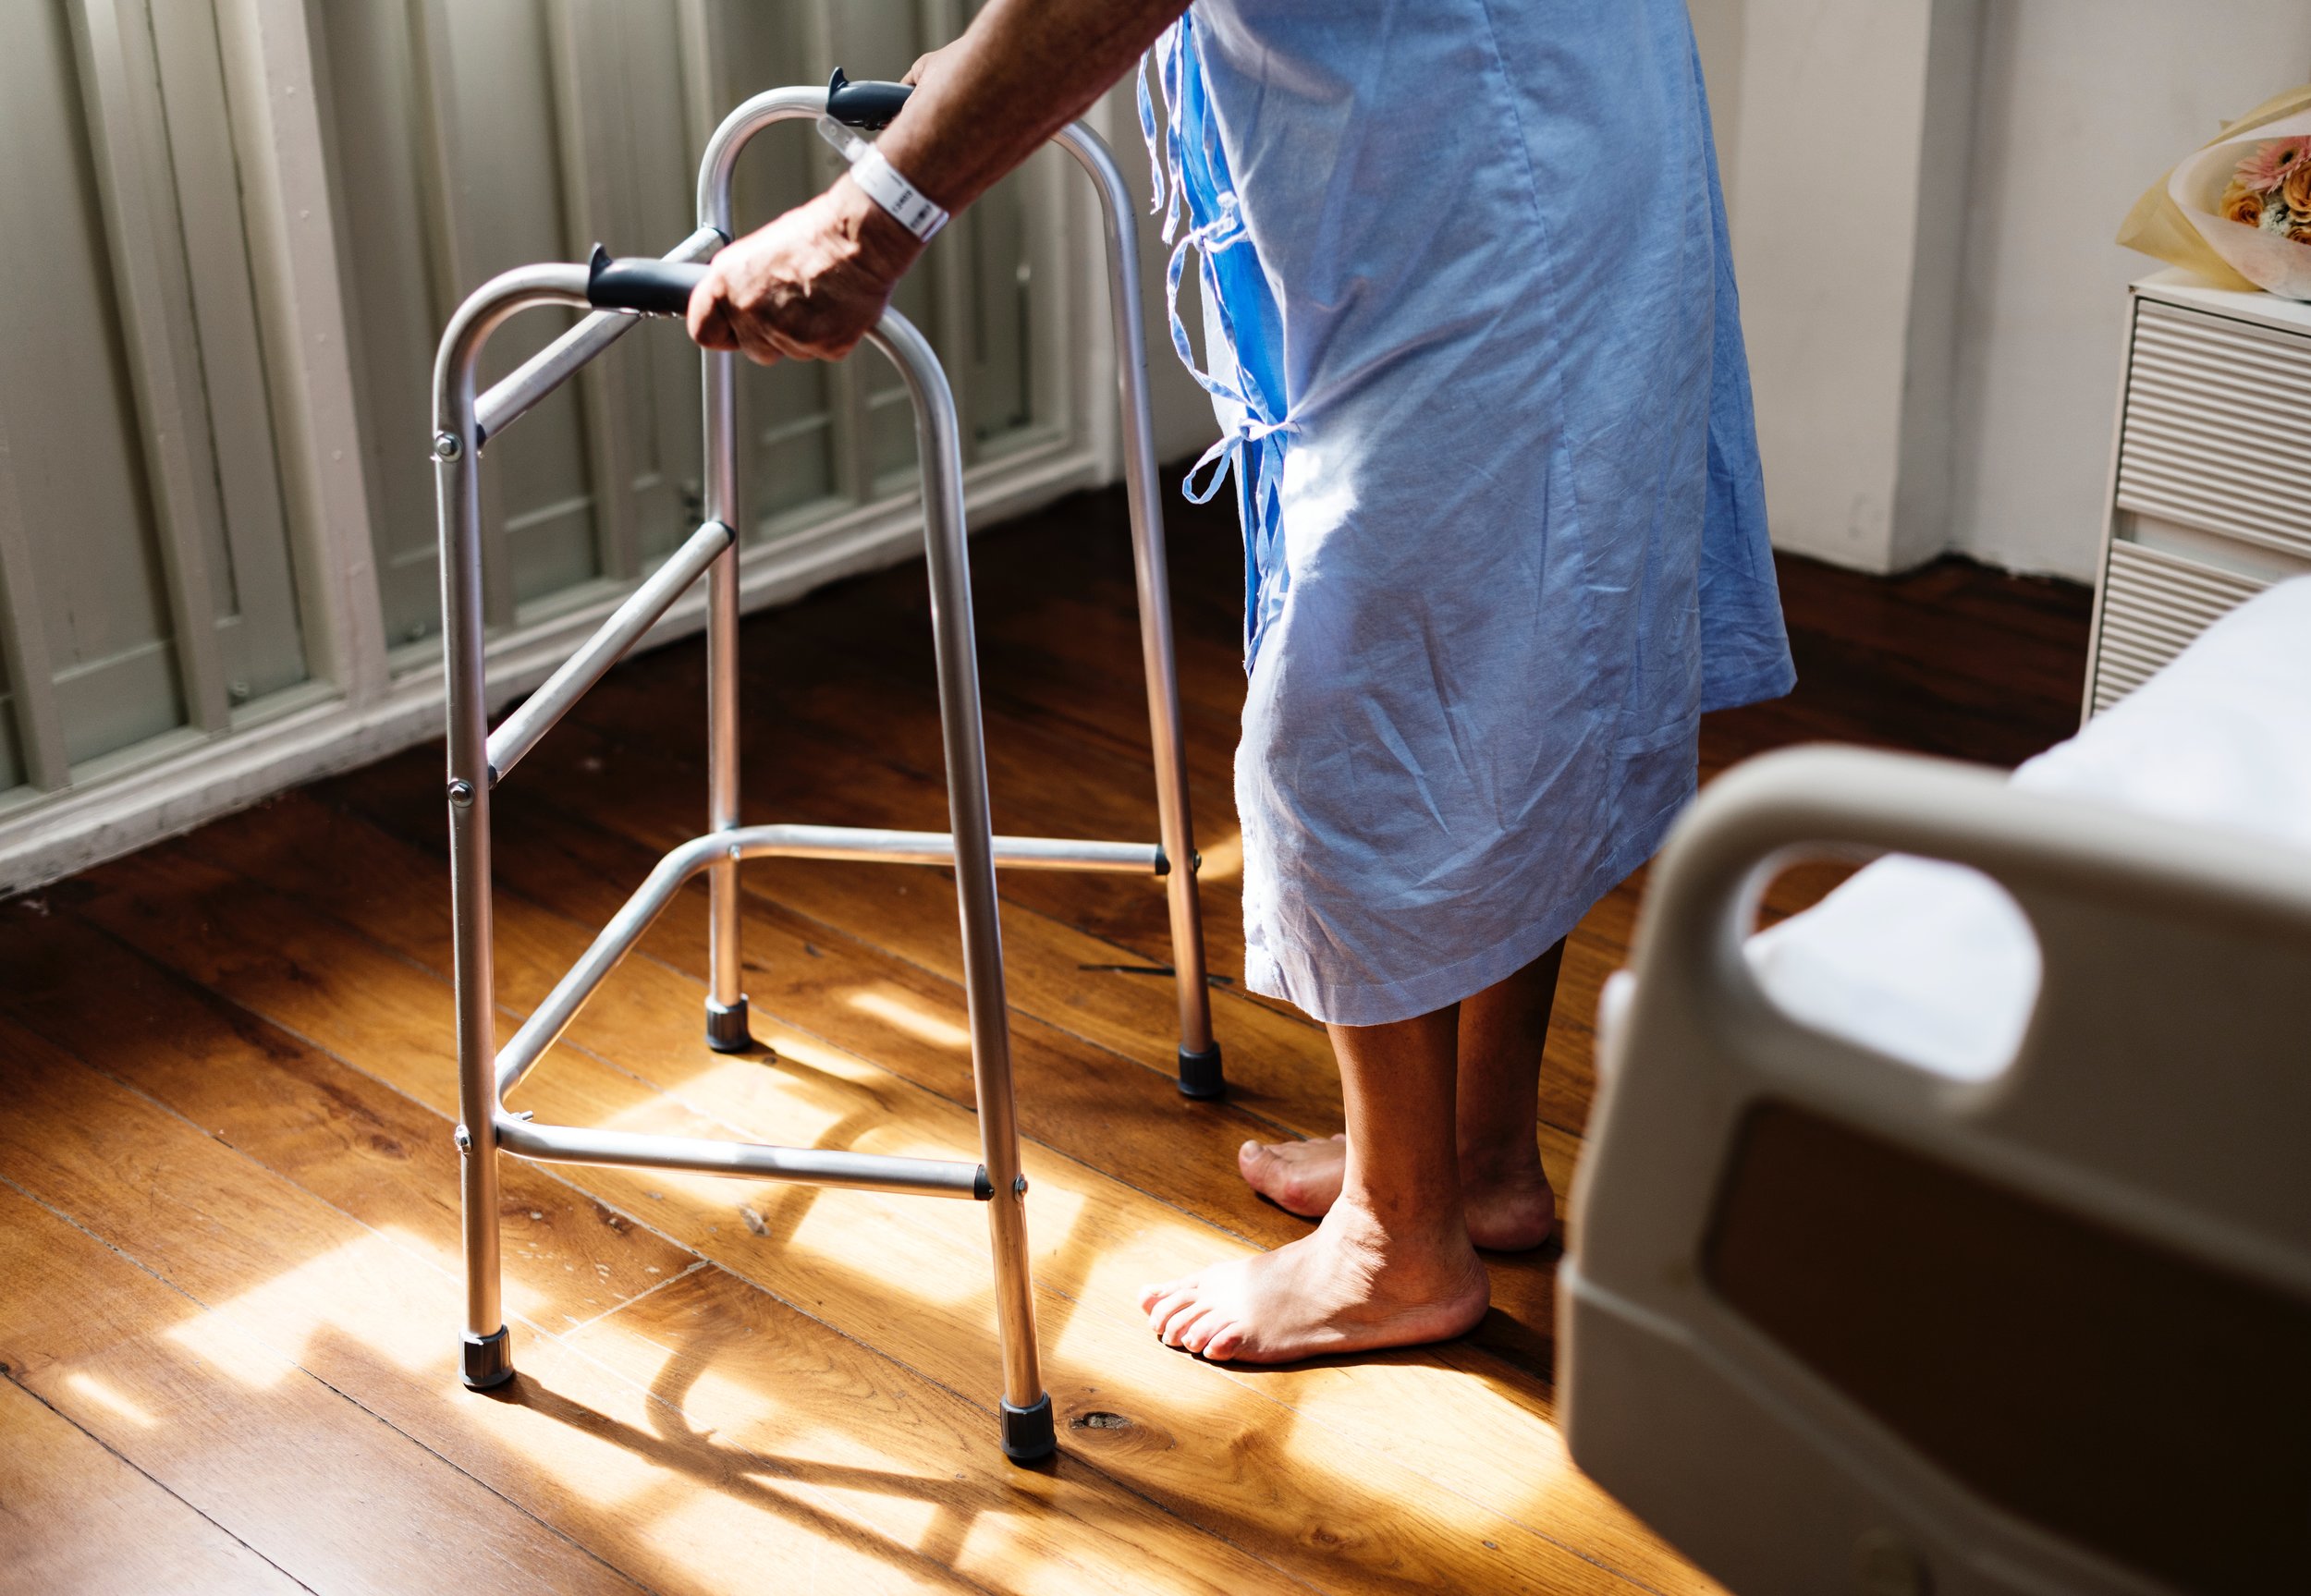 Hospital patient using a walker